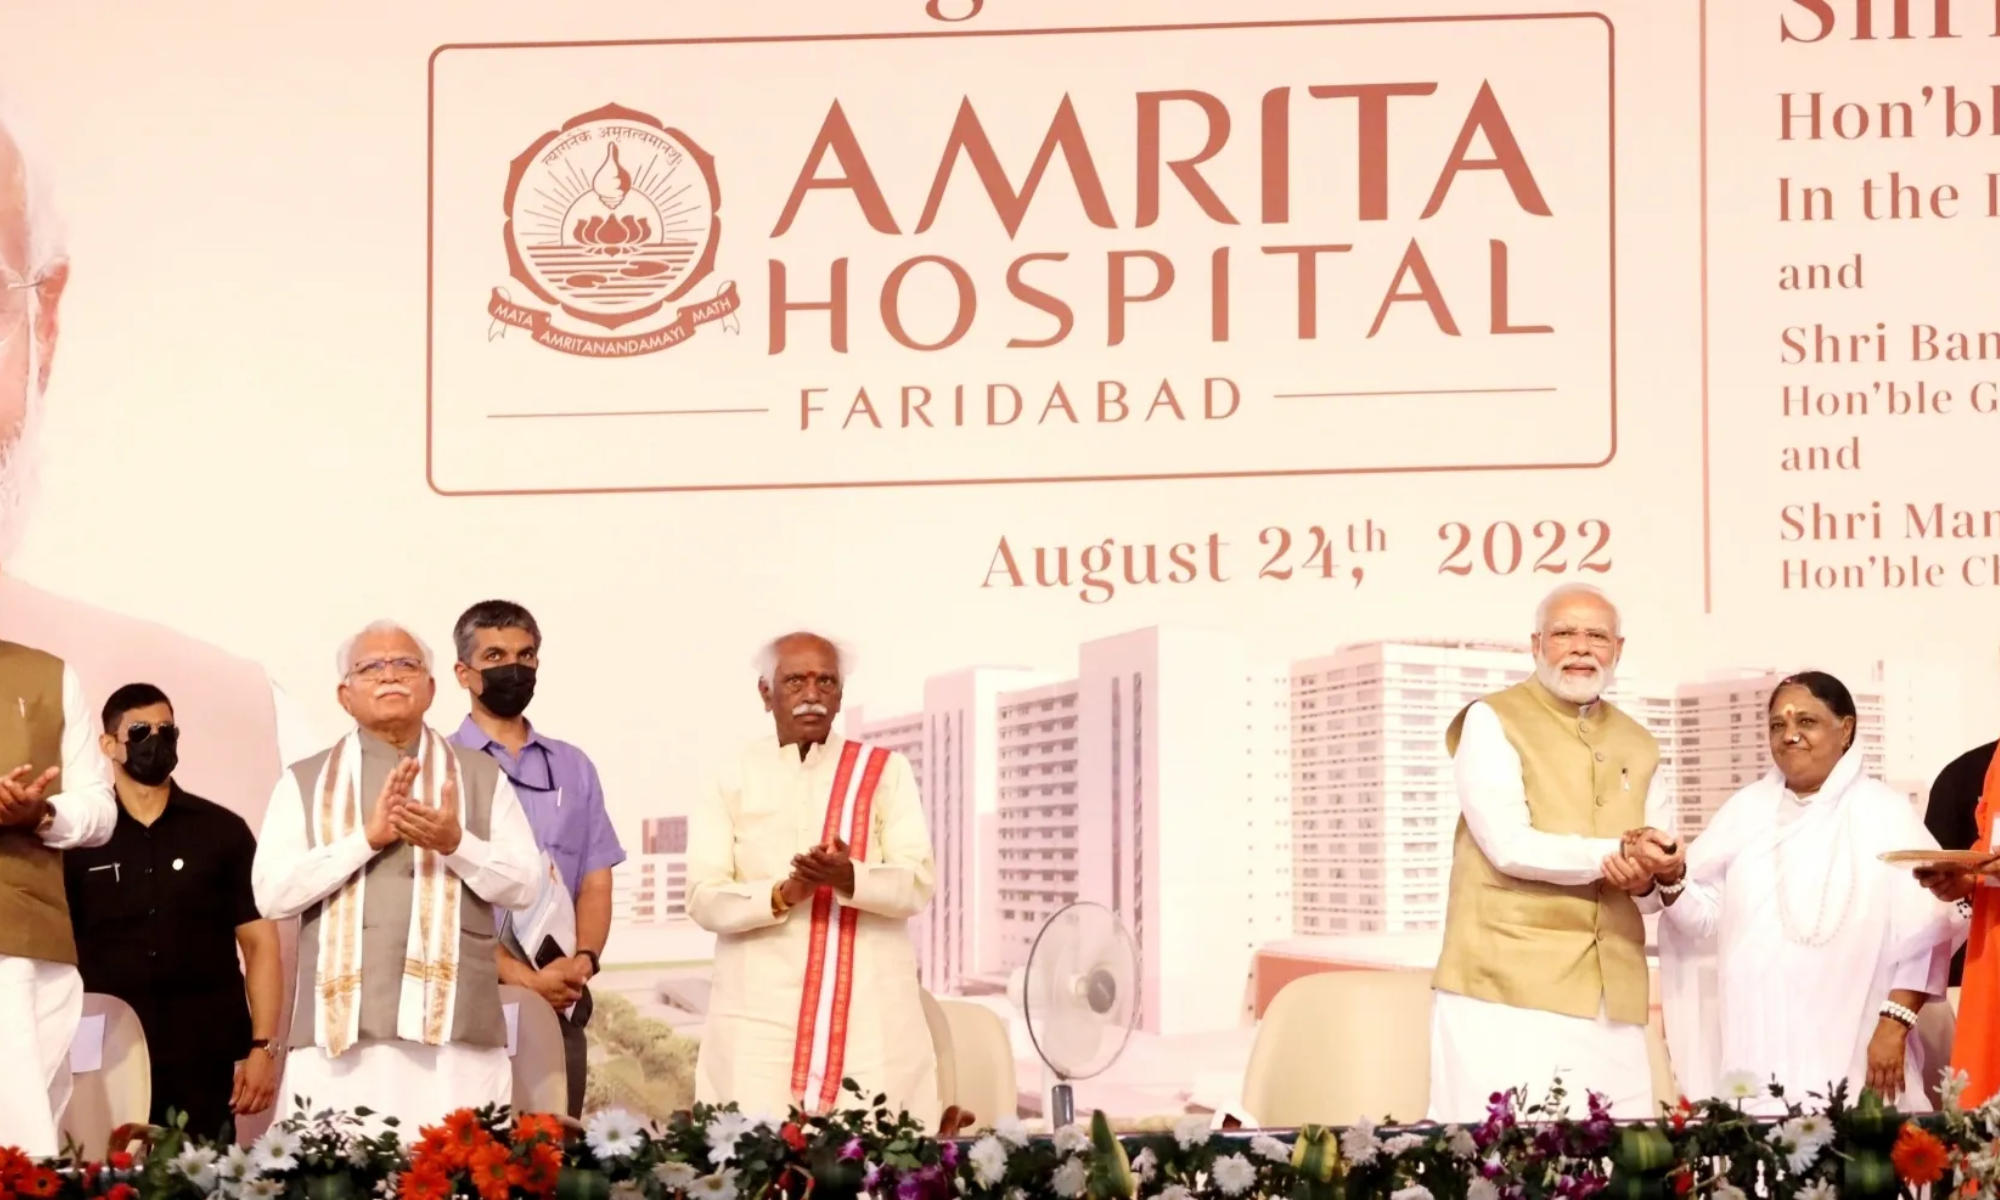 2,600-bed Amrita Hospital in Faridabad, Haryana unveiled by PM Modi